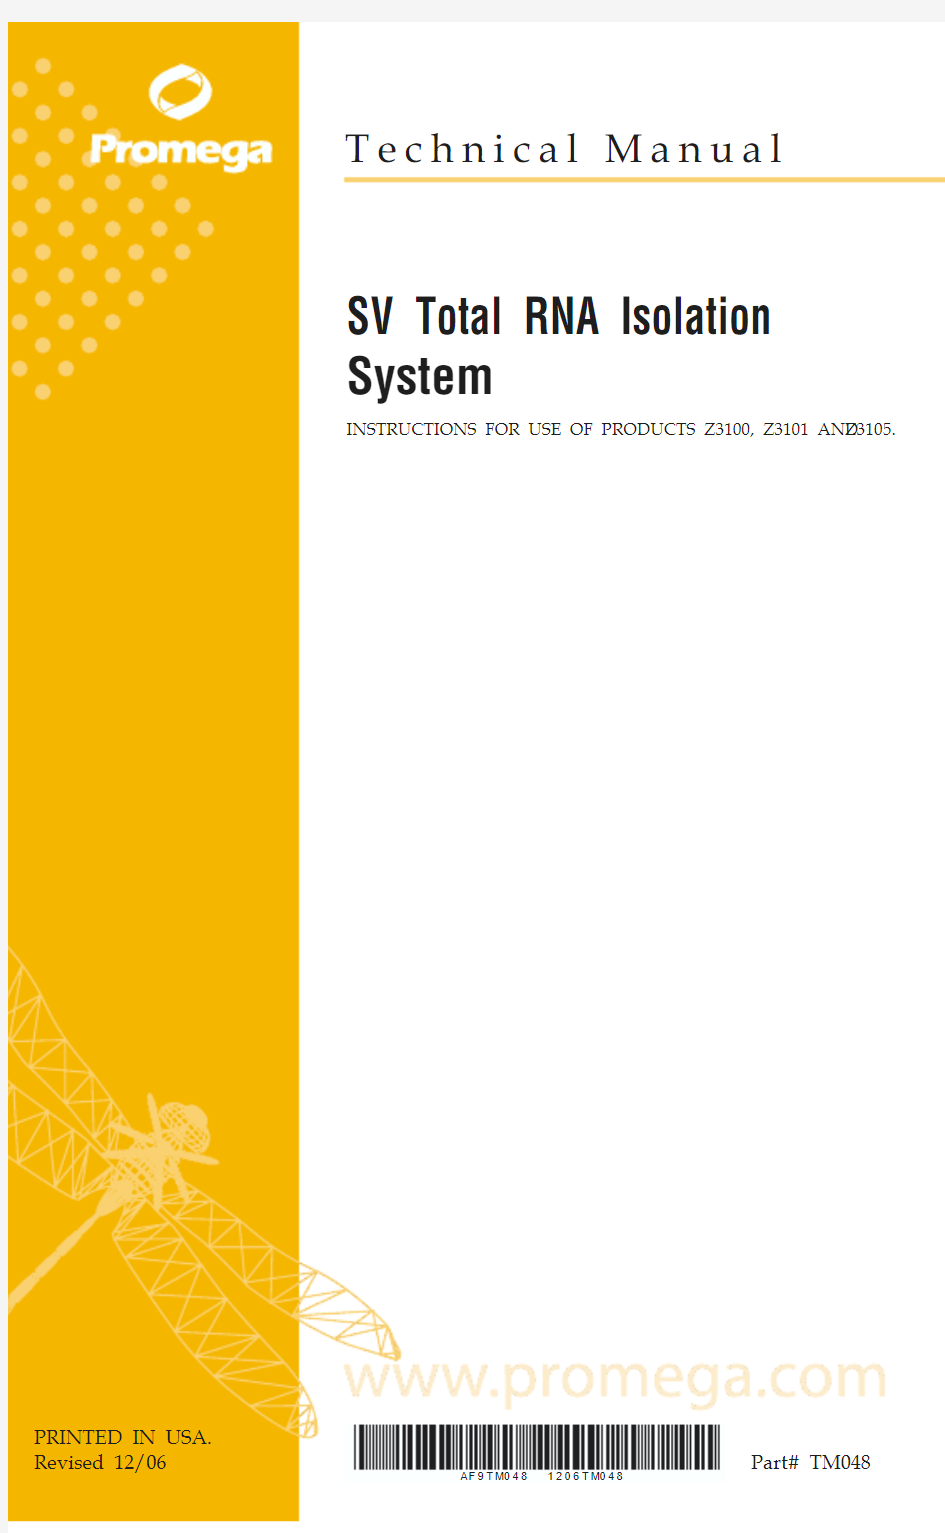 promega_SV_Total_RNA_Isolation_System说明书